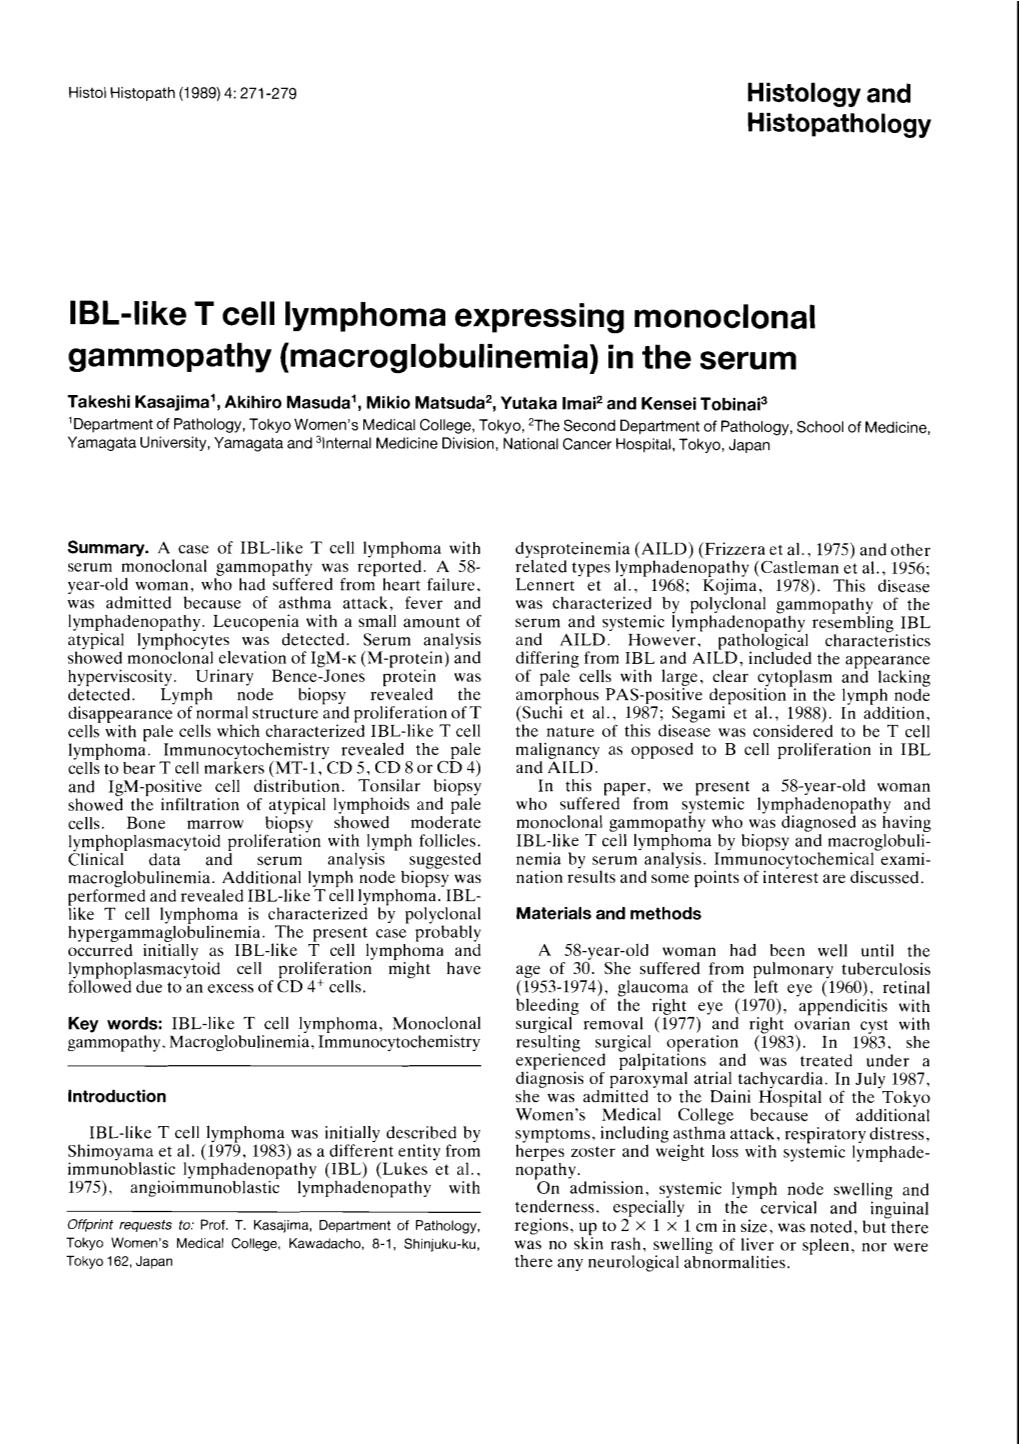 IBL-Like T Cell Lymphoma Expressing Monoclonal Gammopathy (Macroglobulinemia) in the Serum